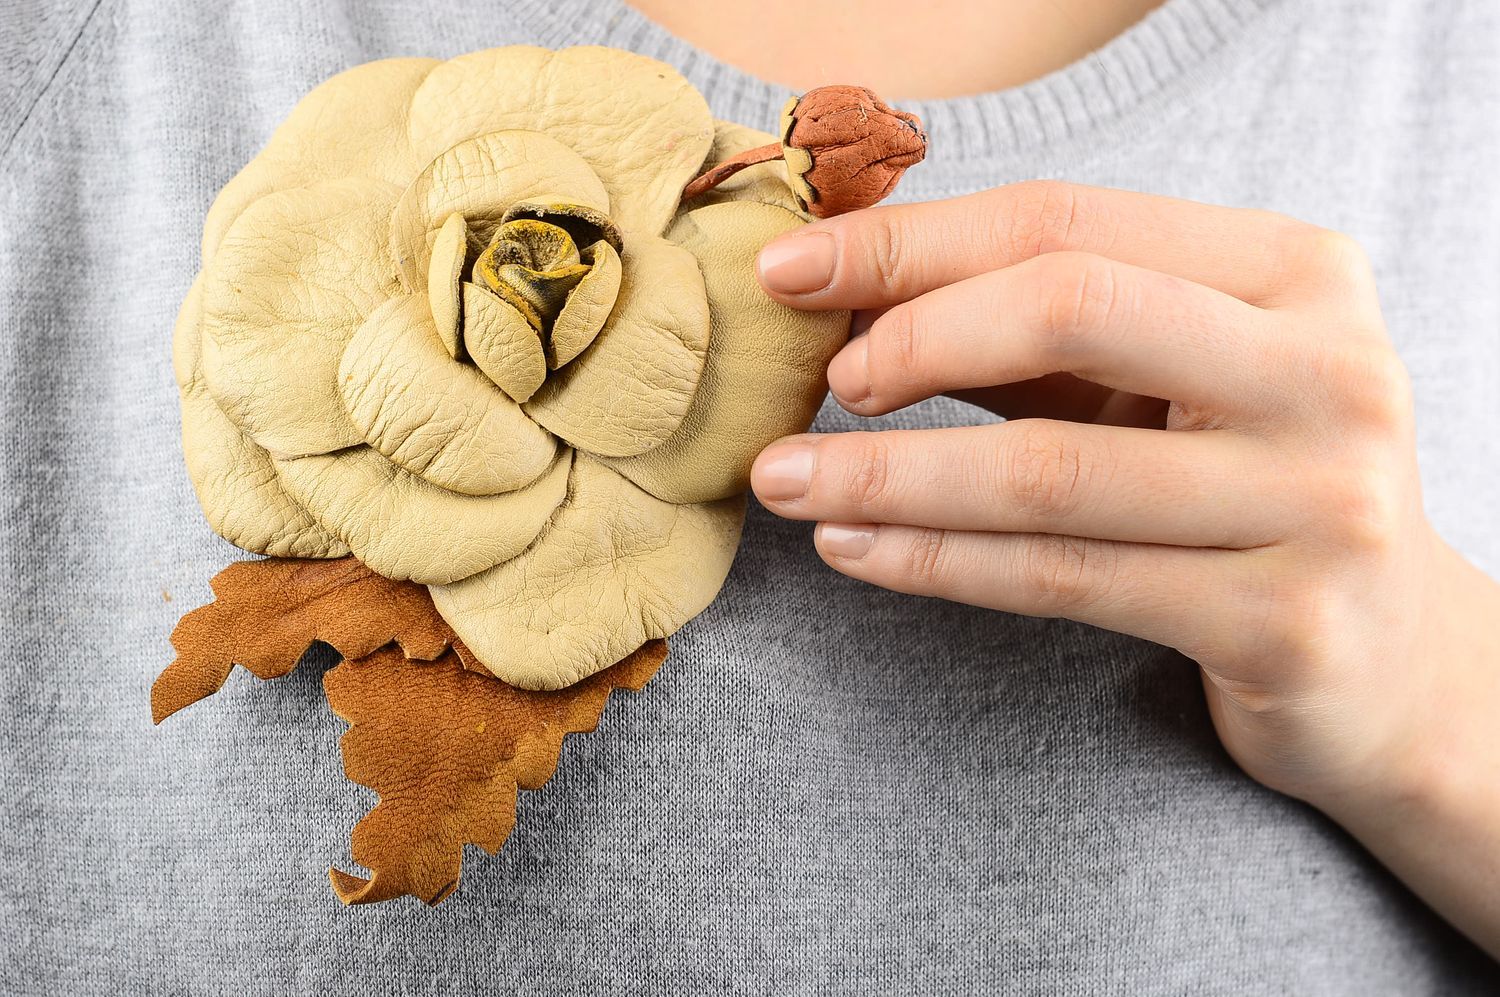 Broche en cuir fait main Broche fantaisie fleur brun-beige Accessoire femme photo 1